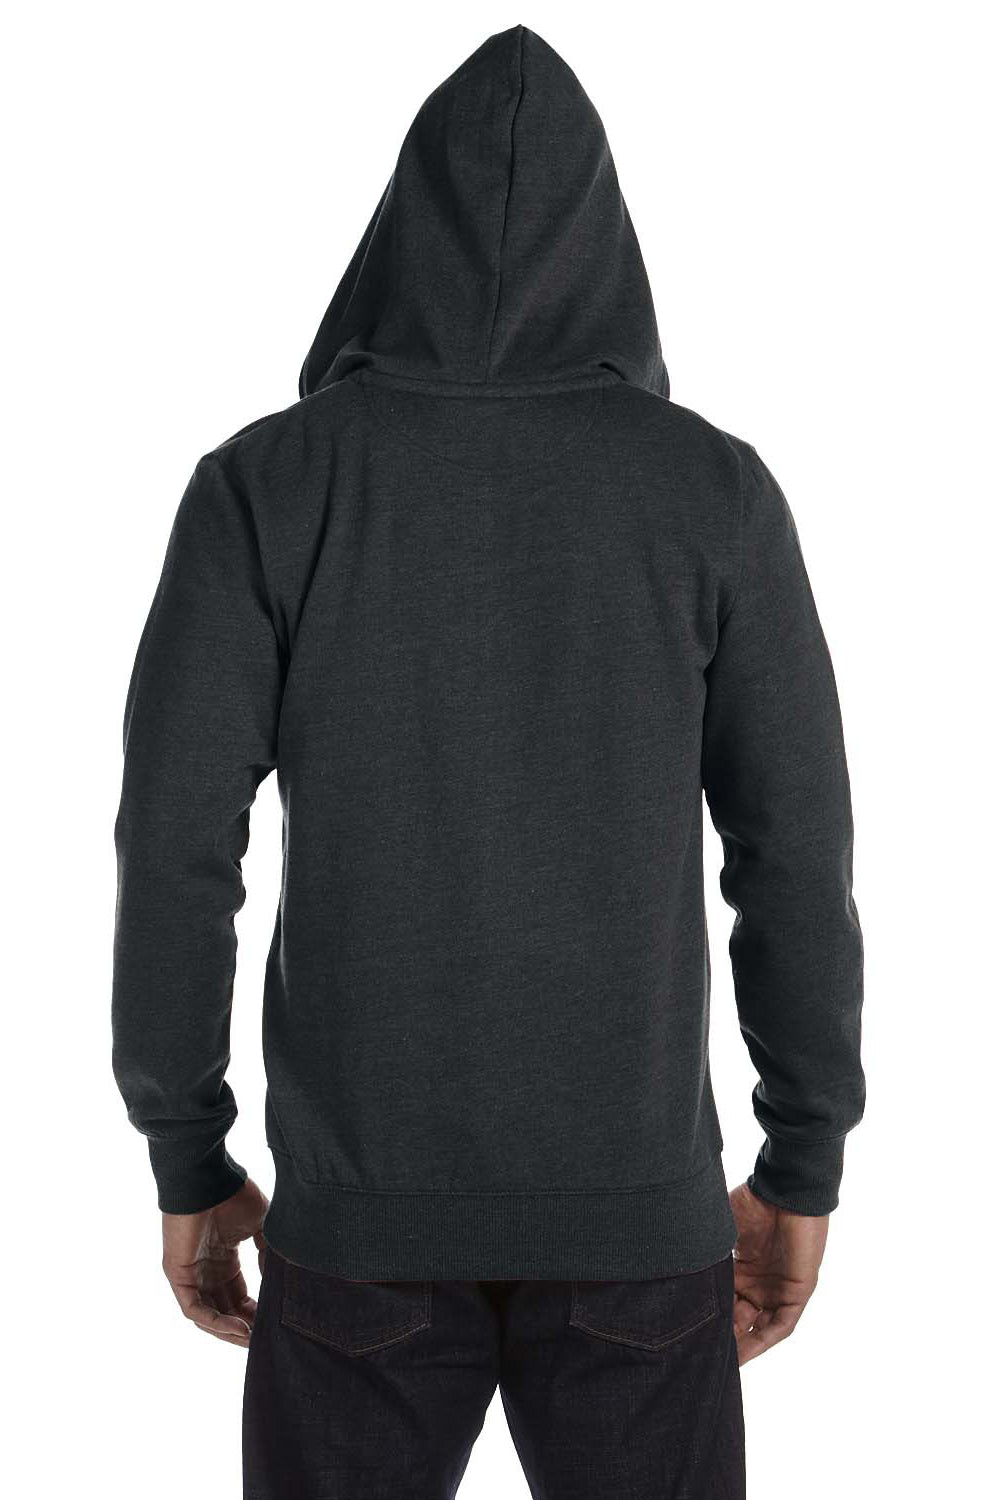 Econscious EC5680 Mens Heathered Fleece Full Zip Hooded Sweatshirt Hoodie Charcoal Grey Back